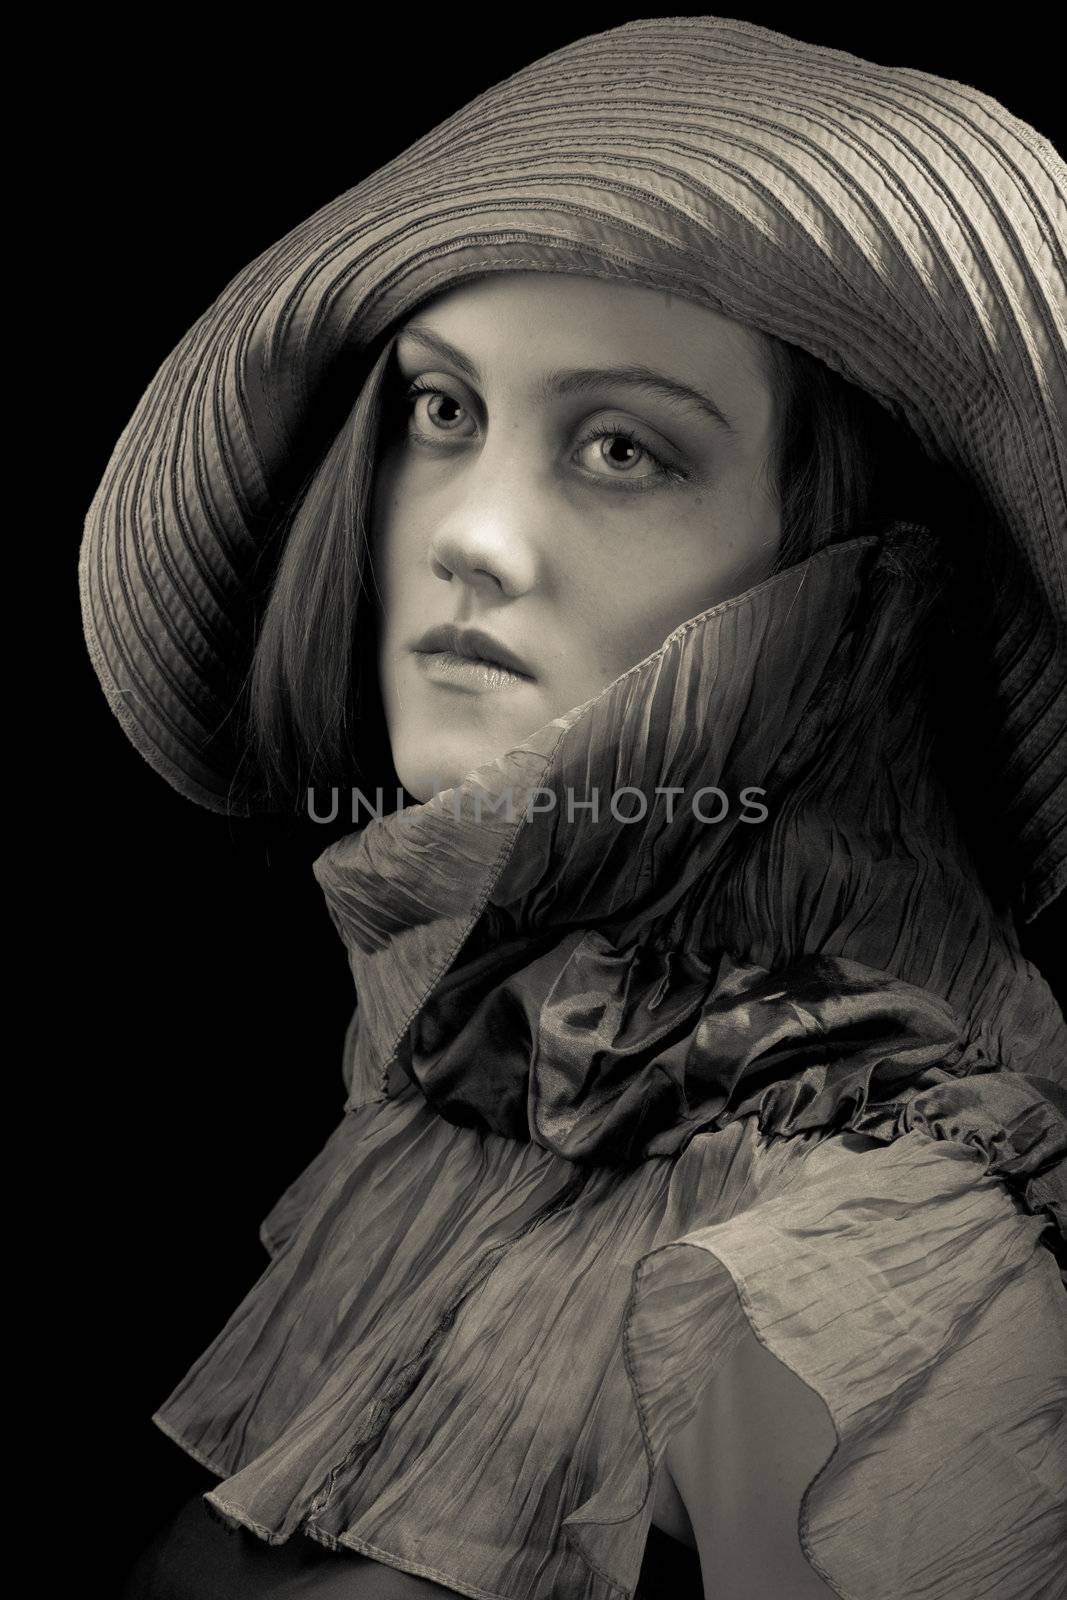 Portrait of a beauty in hat in style of 1910 - 1920